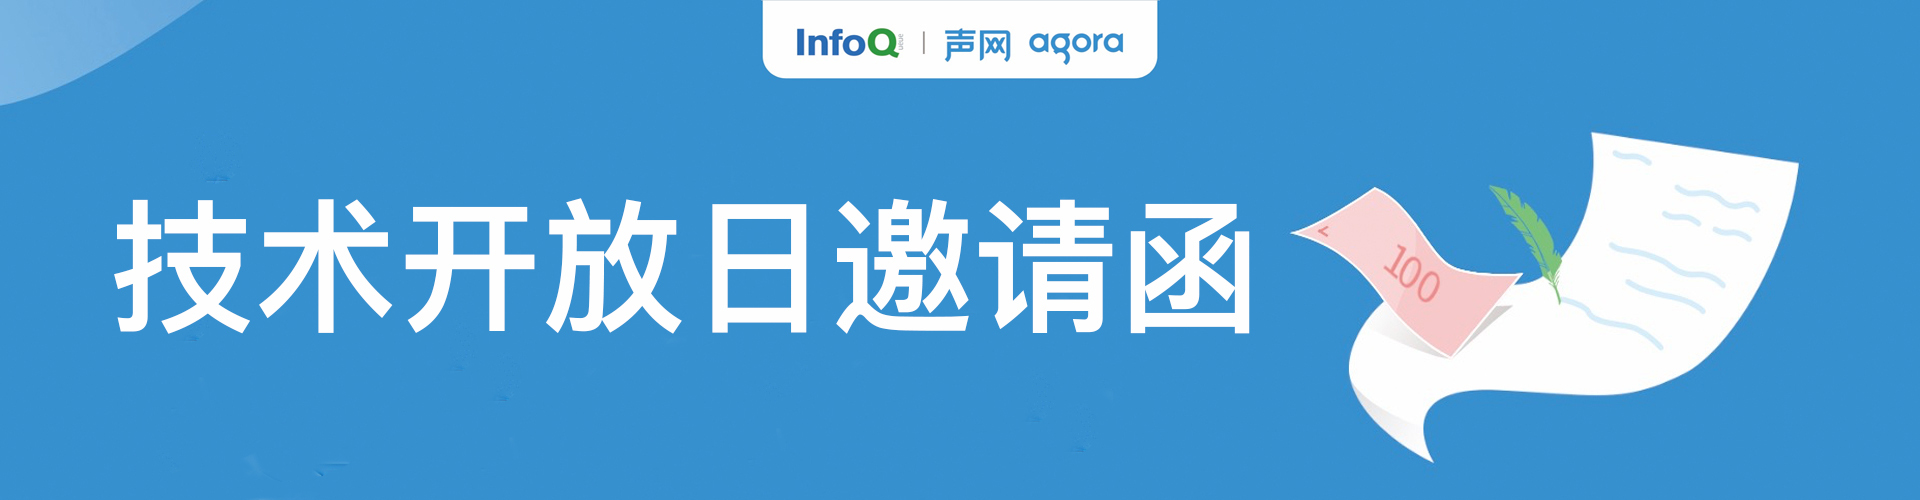 InfoQ & 声网Agora 技术开放日邀请函